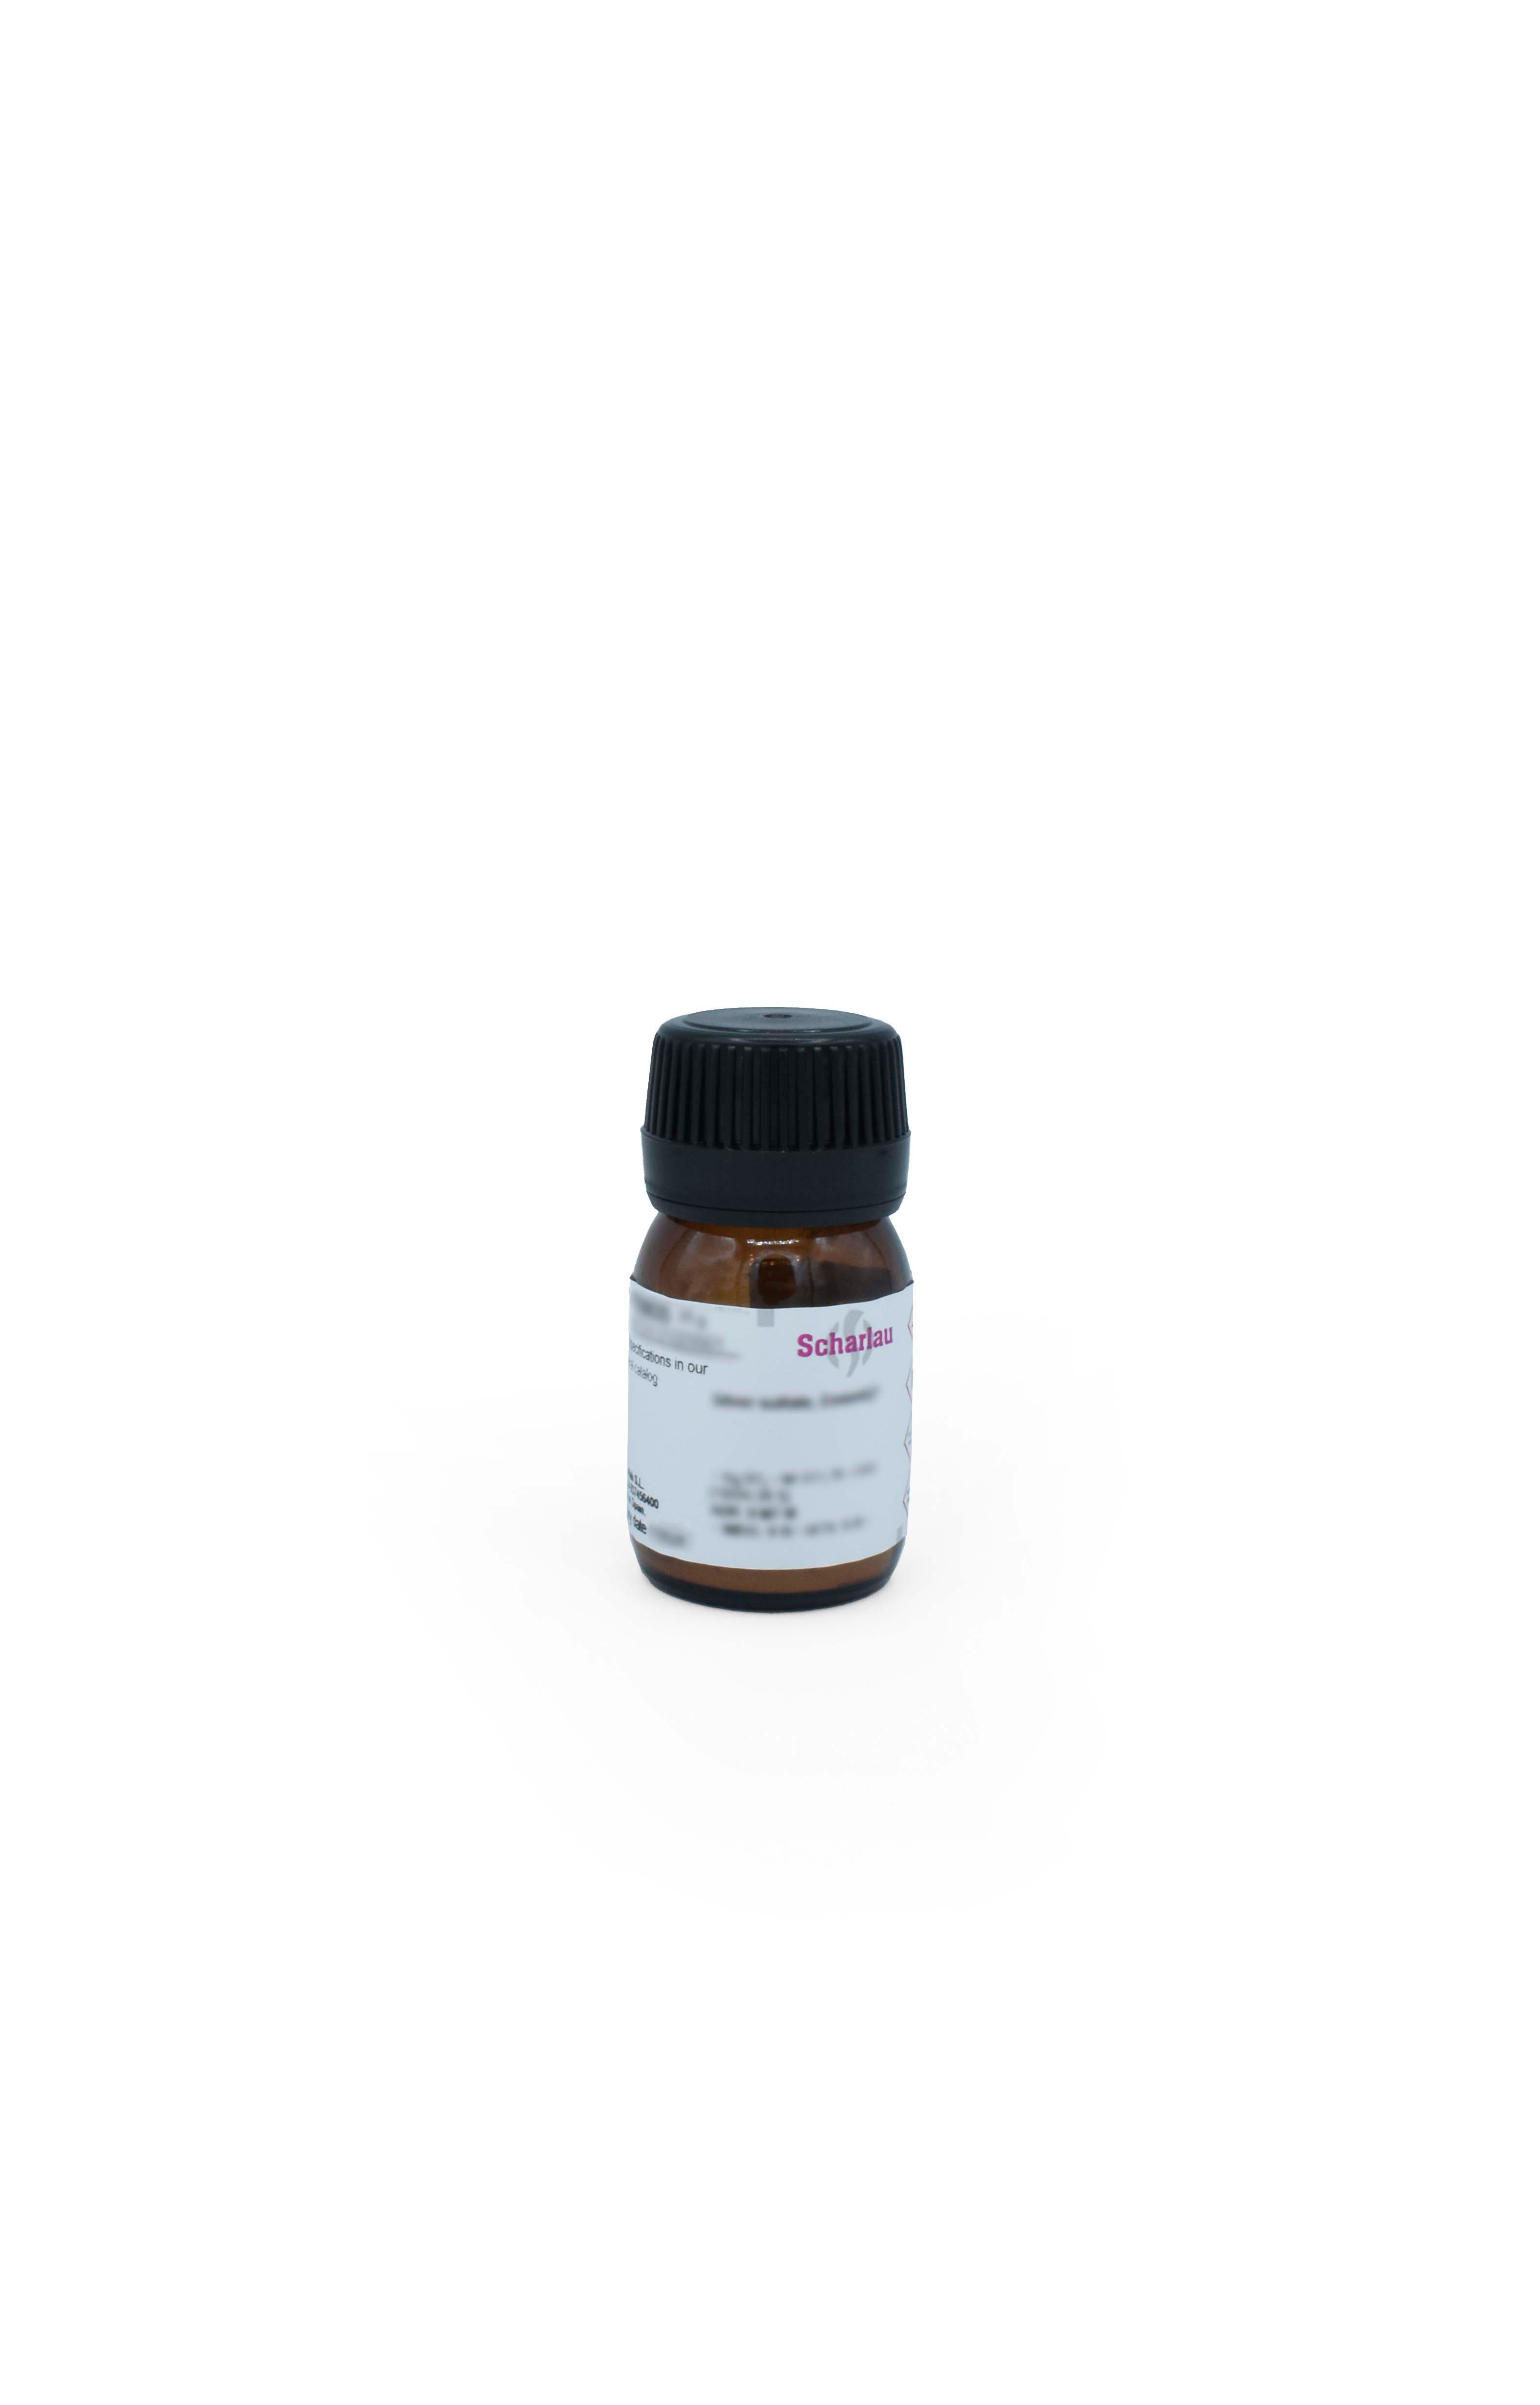 Vitamina B6 clorhidrato, Adermina hidrocloruro, Piridoxal clorhidrato